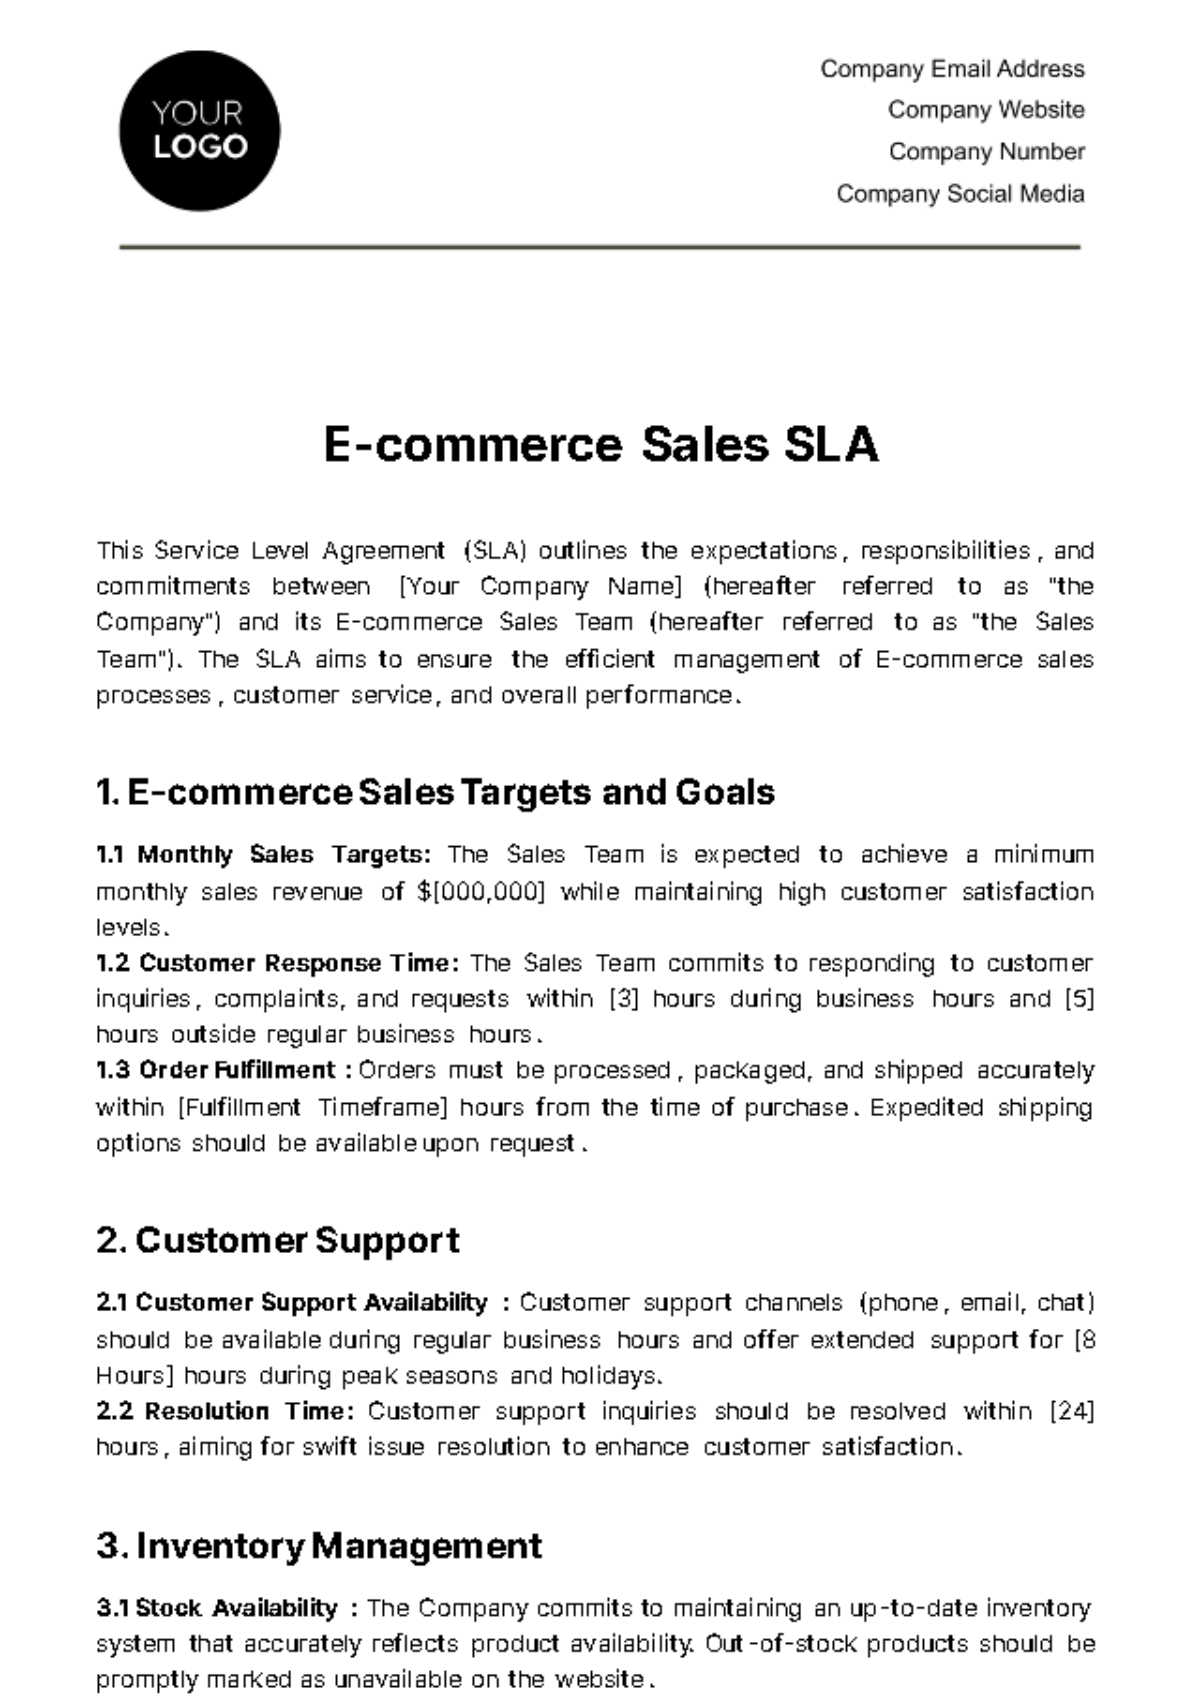 E-commerce Sales SLA Template